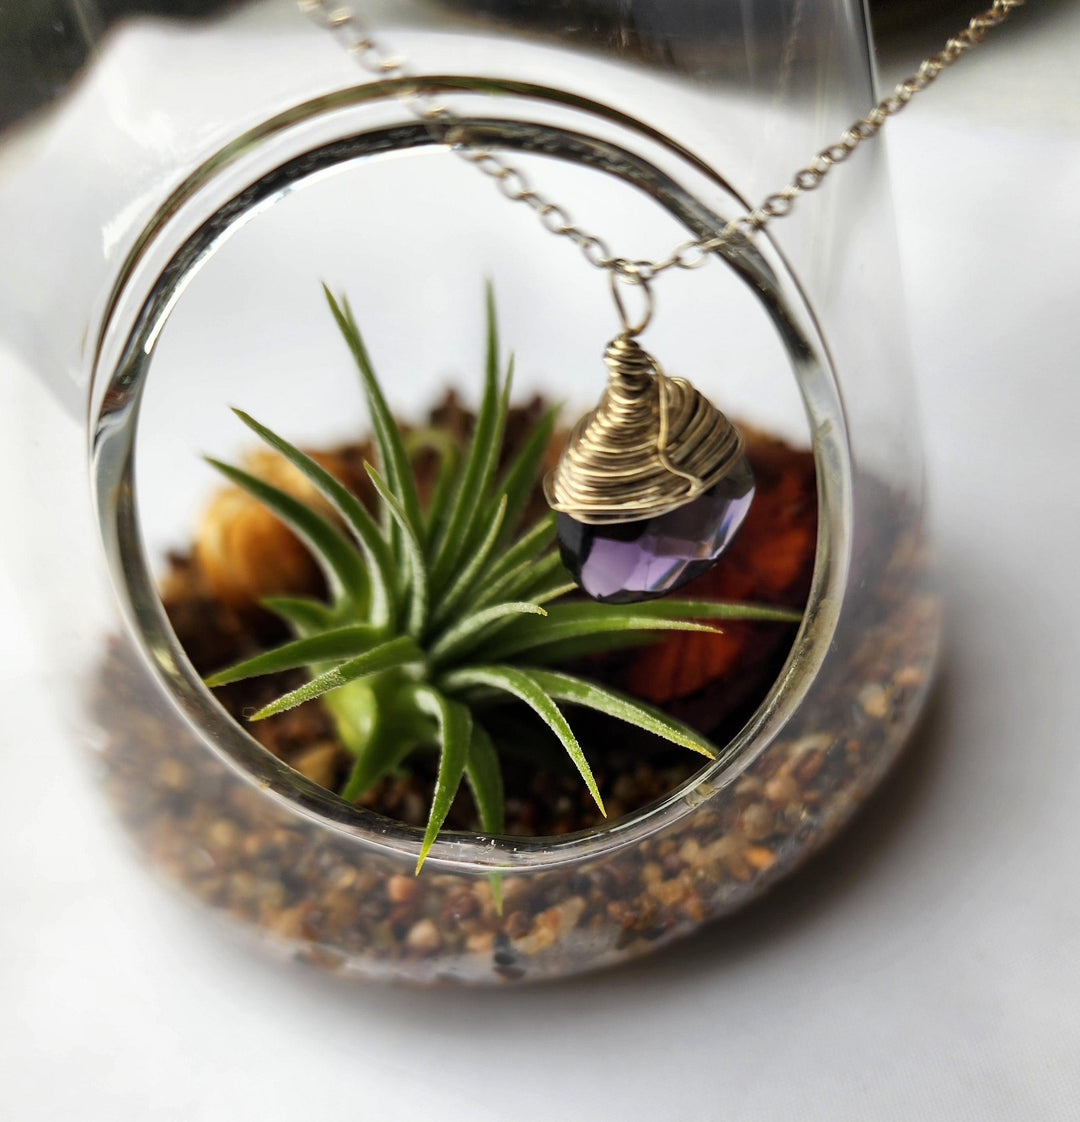 Beautiful Purple Amethyst Necklace - LB Designs